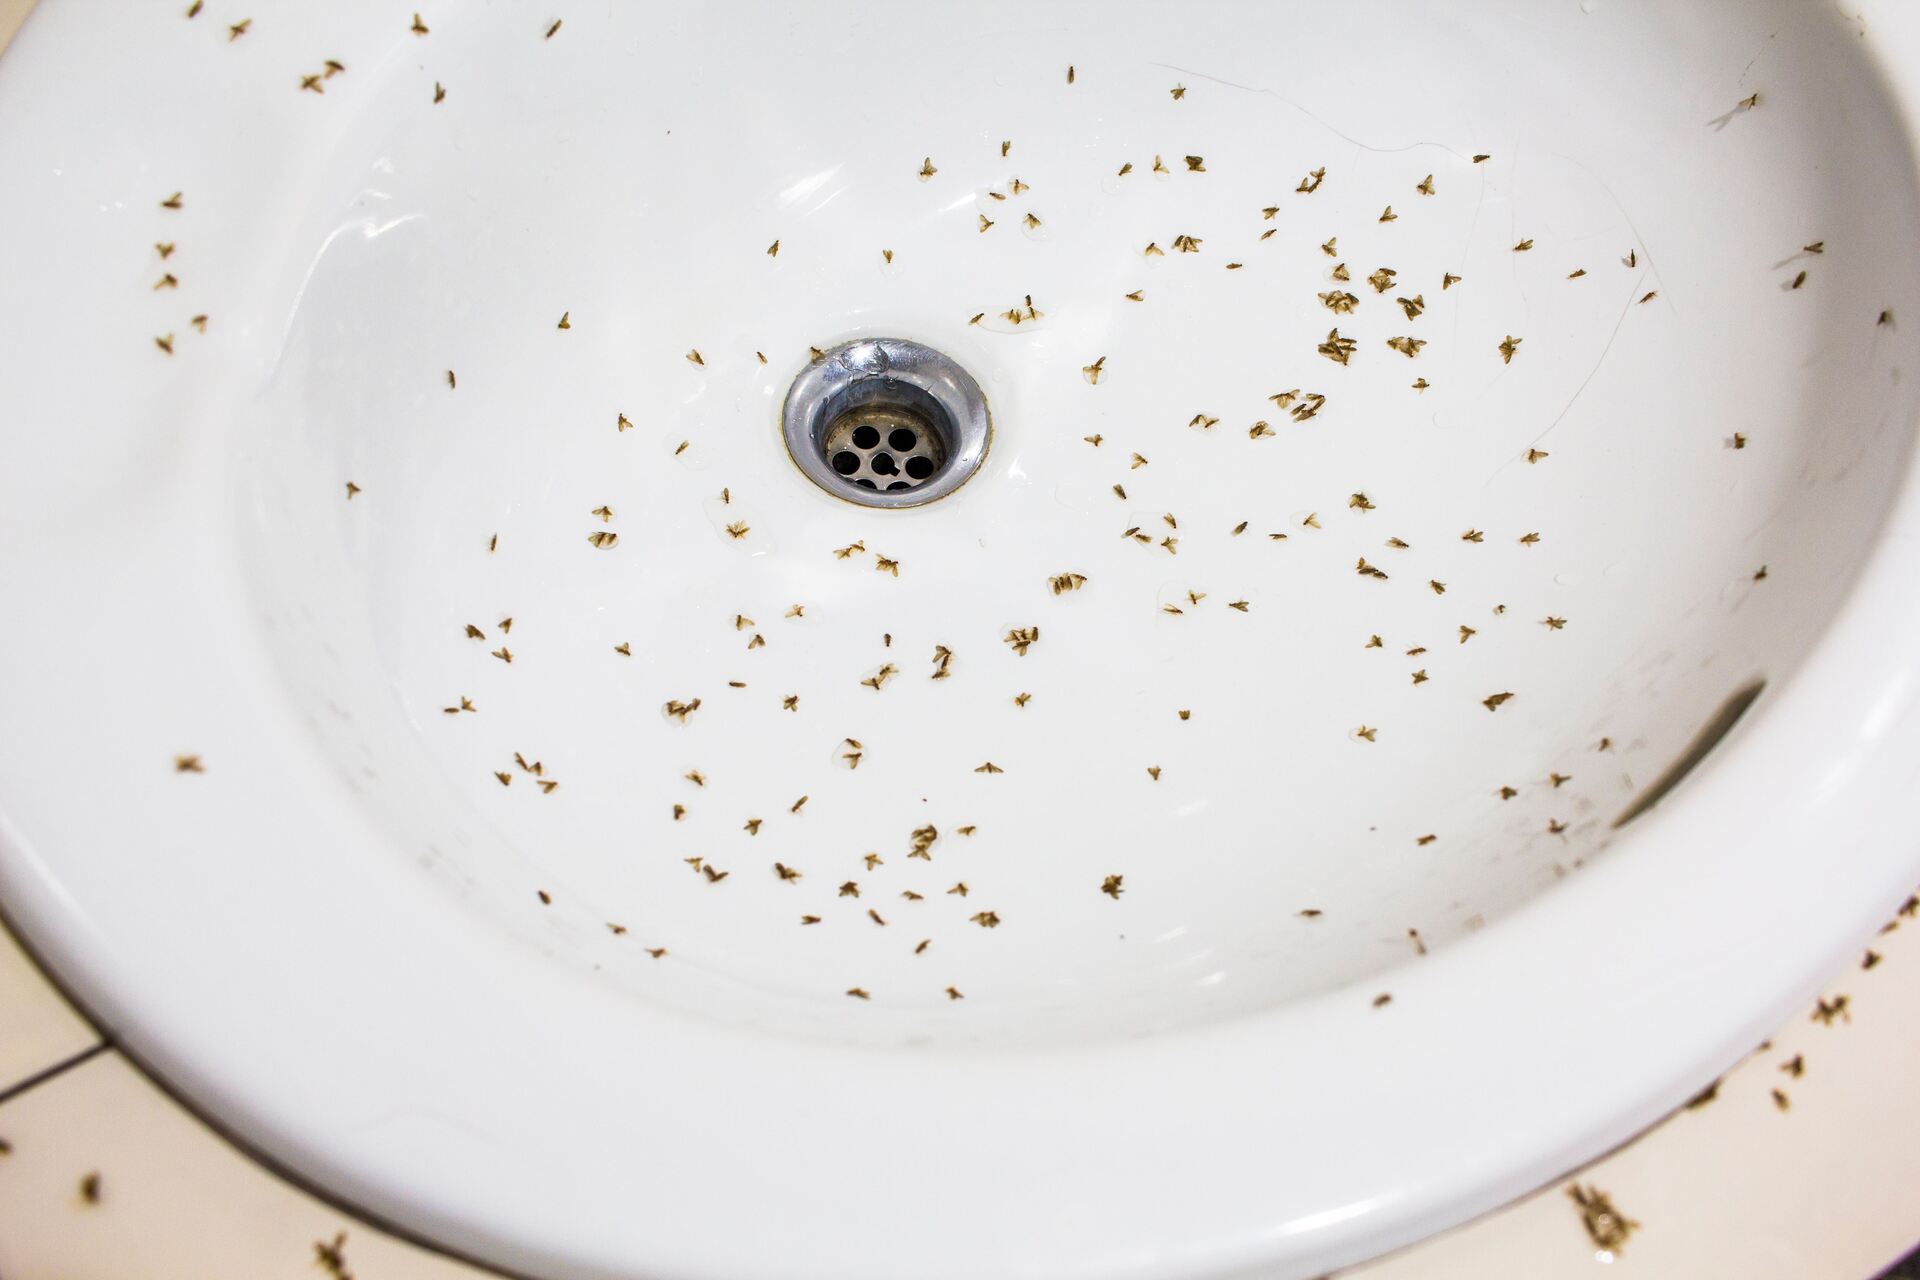 How To Get Rid Of Sink Flies